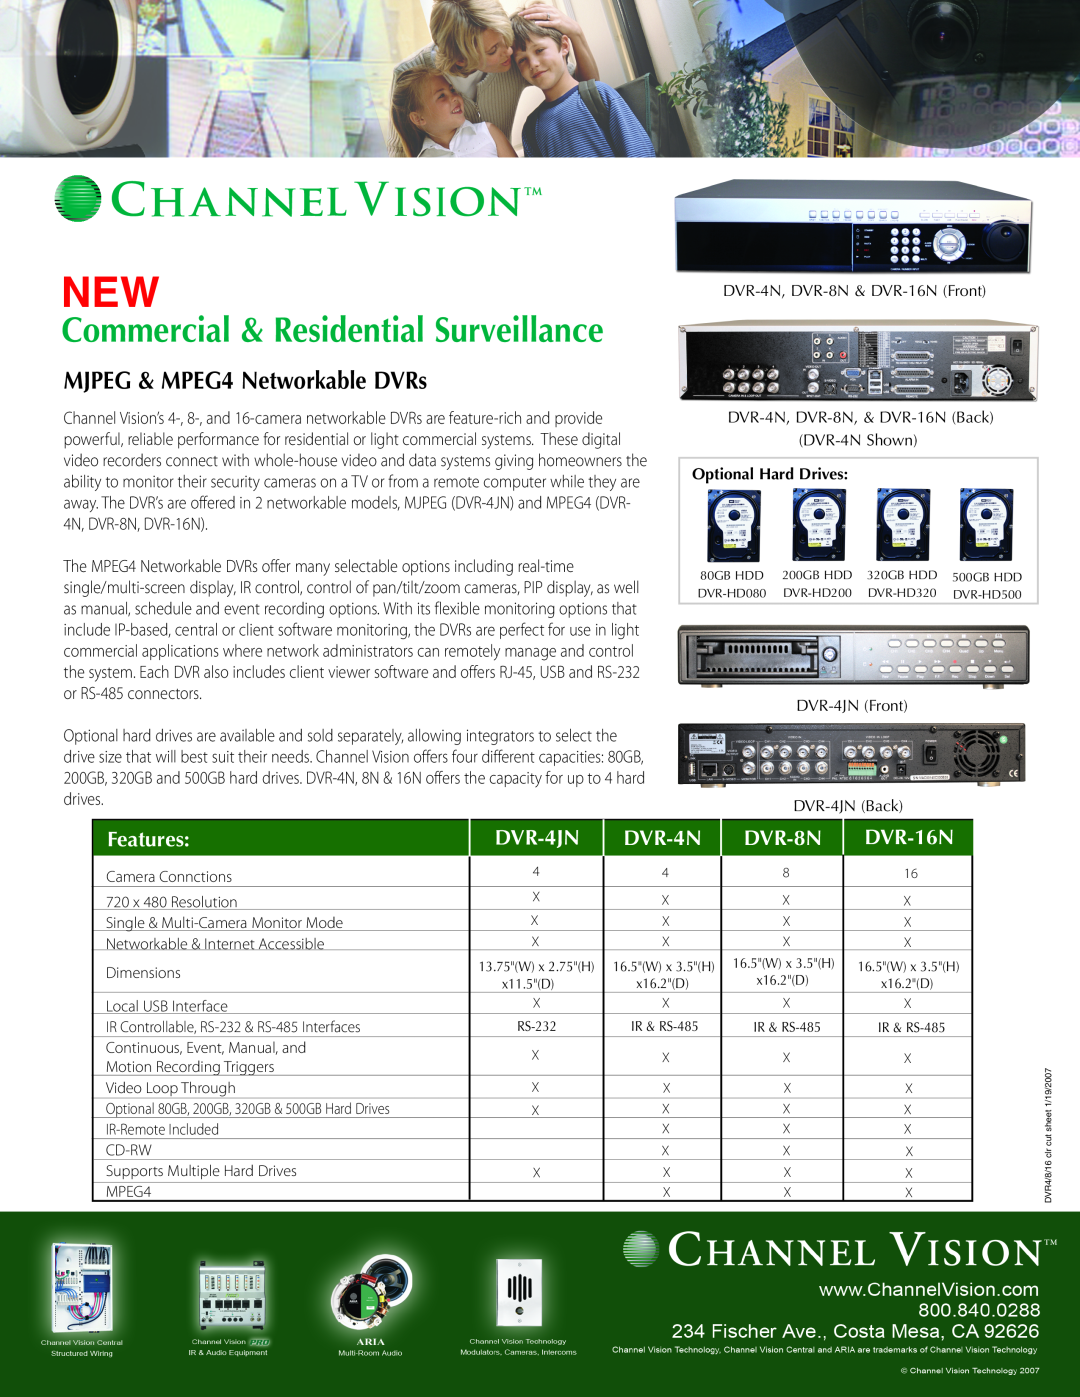 Channel Vision 6305-B Commercial & Residential Surveillance, MJPEG & MPEG4 Networkable DVRs, Features, DVR-4JN, DVR-4N 